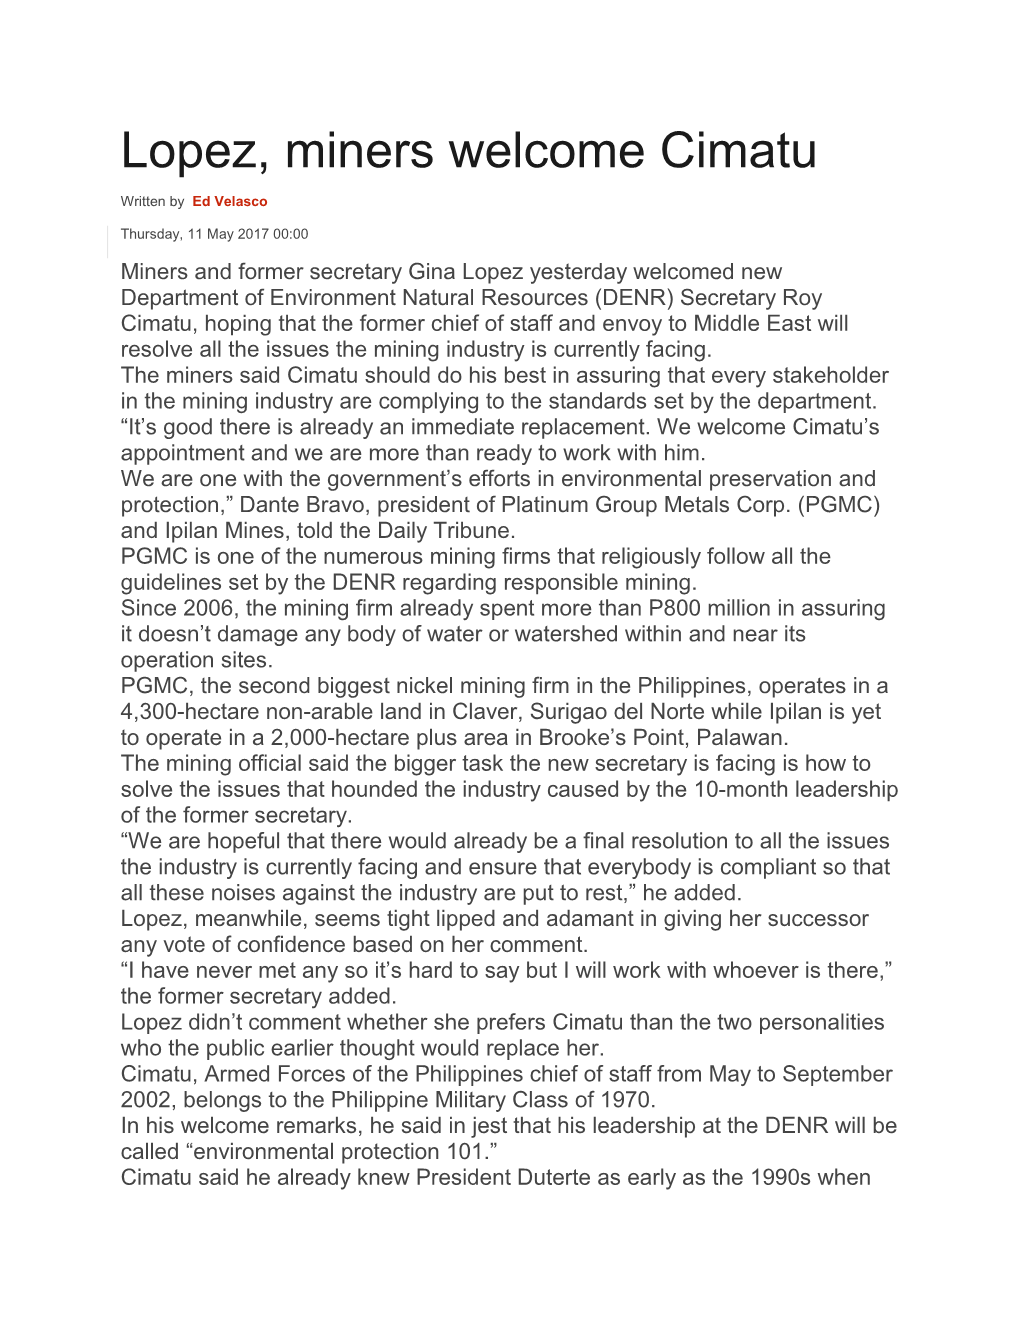 Lopez, Miners Welcome Cimatu